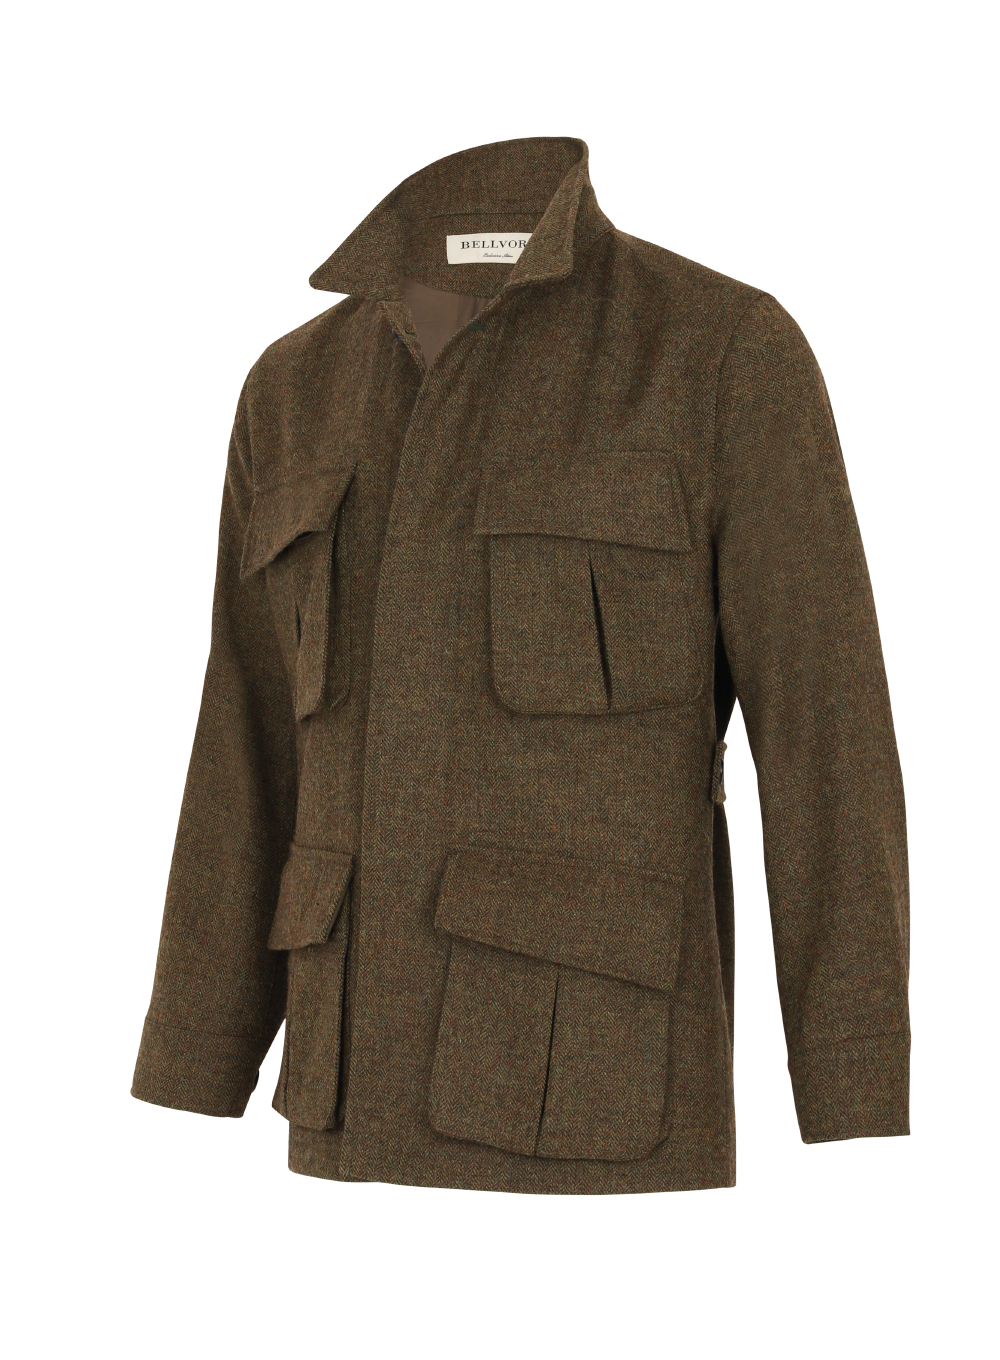 Marton Mills Wool Field Jacket - Olive GreenBellvoro(벨보로)